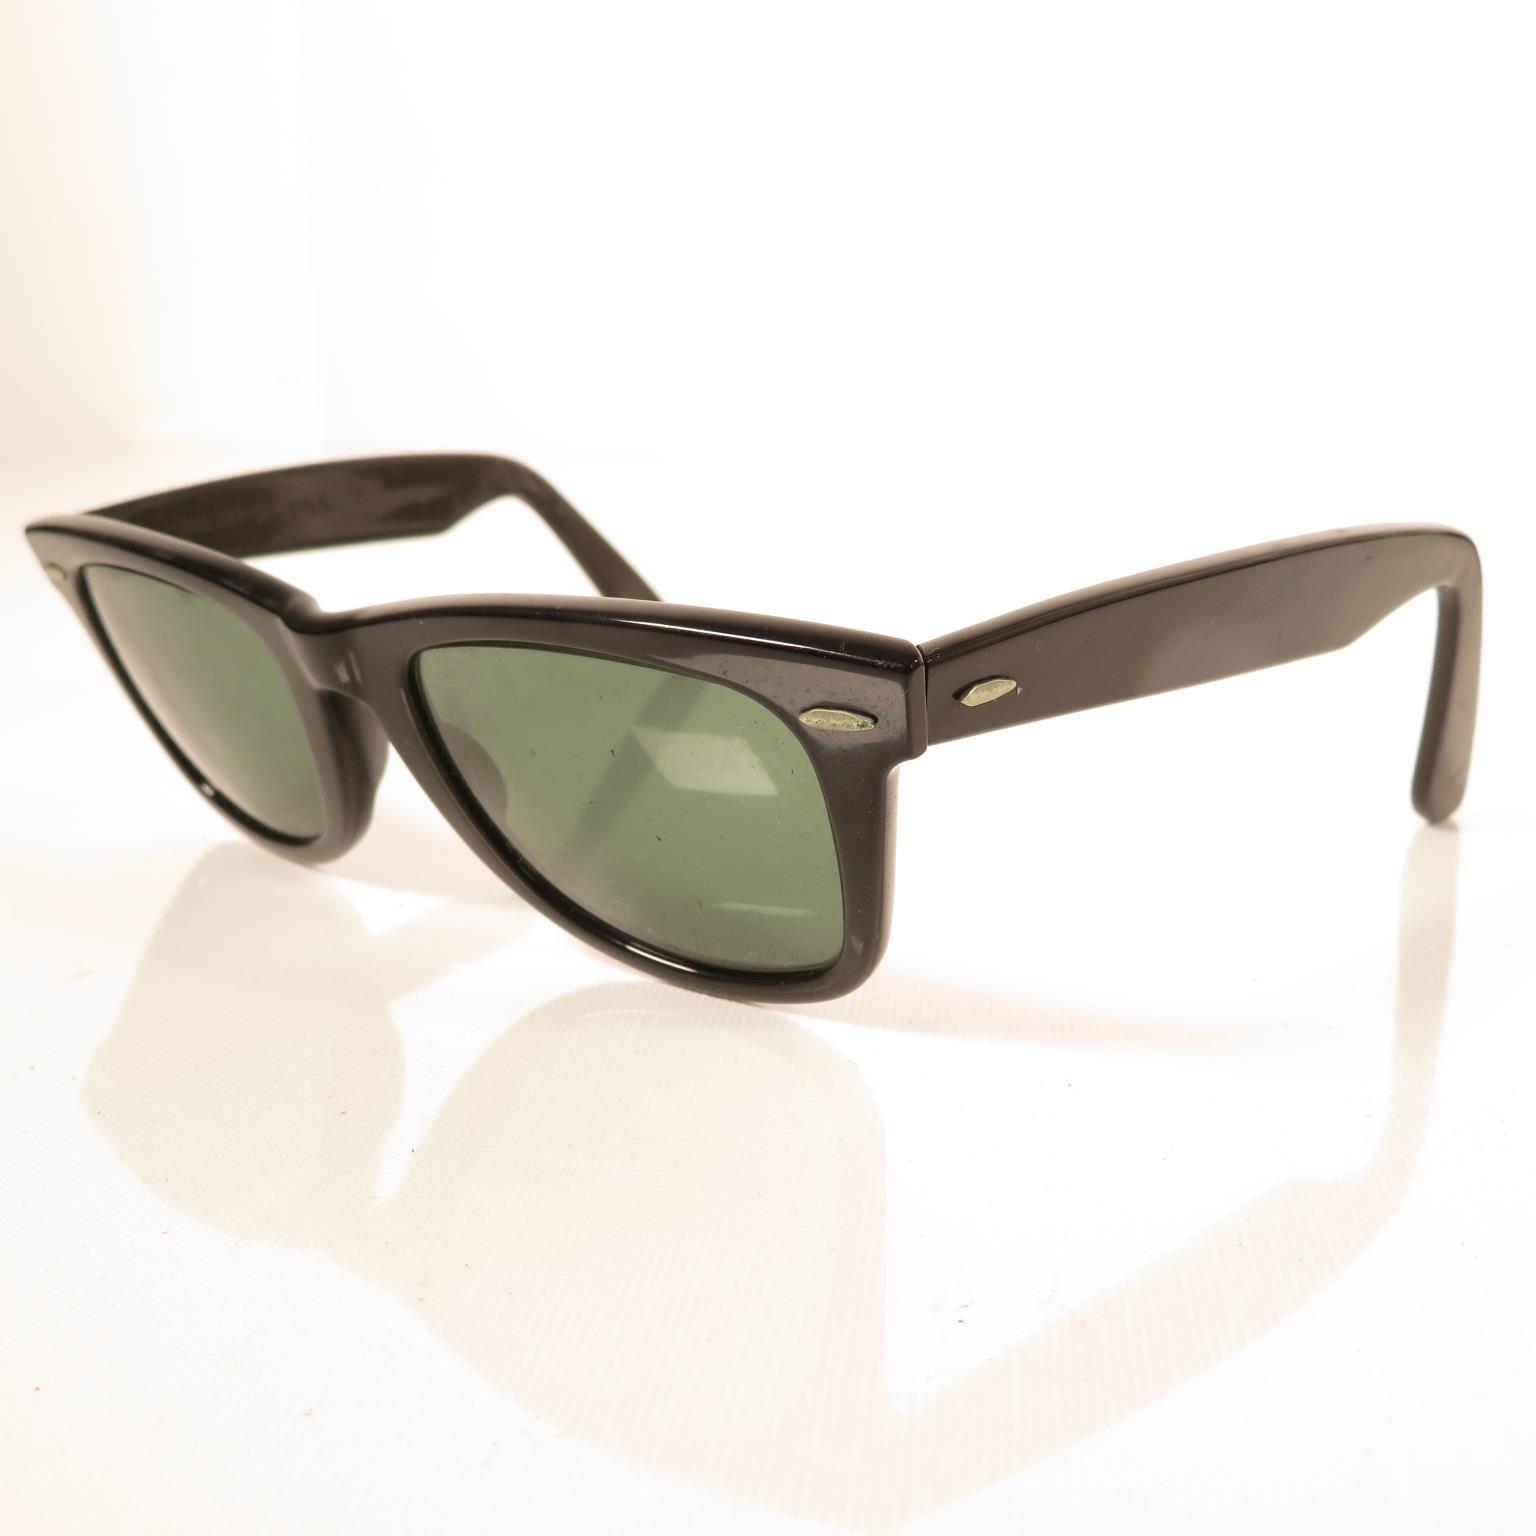 5x sets Ray Ban sunglasses - - Image 4 of 24